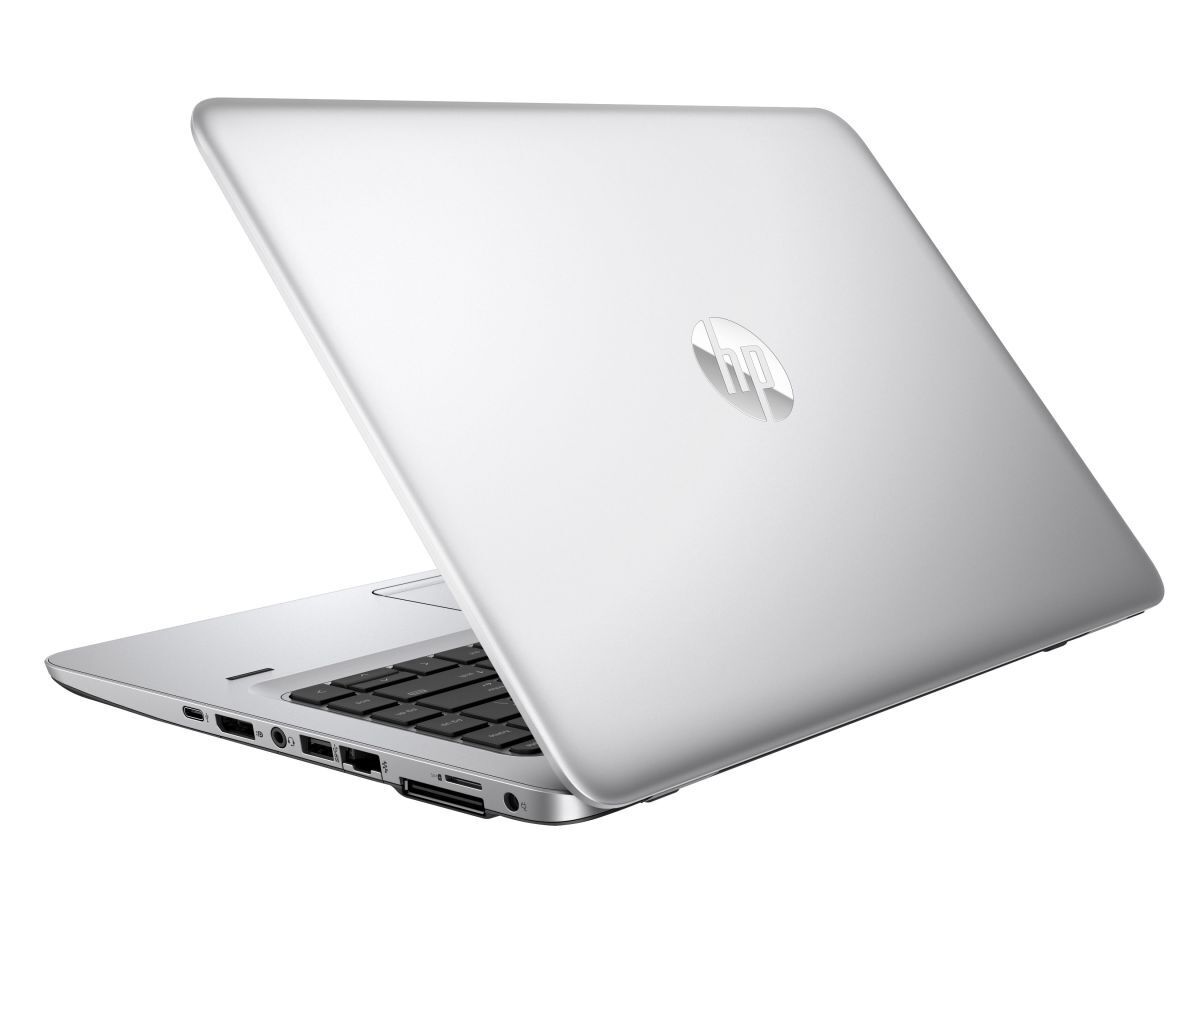 HP EliteBook 840 G4 Intel i5 7300U 2.60GHz 8GB RAM 500GB SSD 14" Win 10 - B Grade Image 2